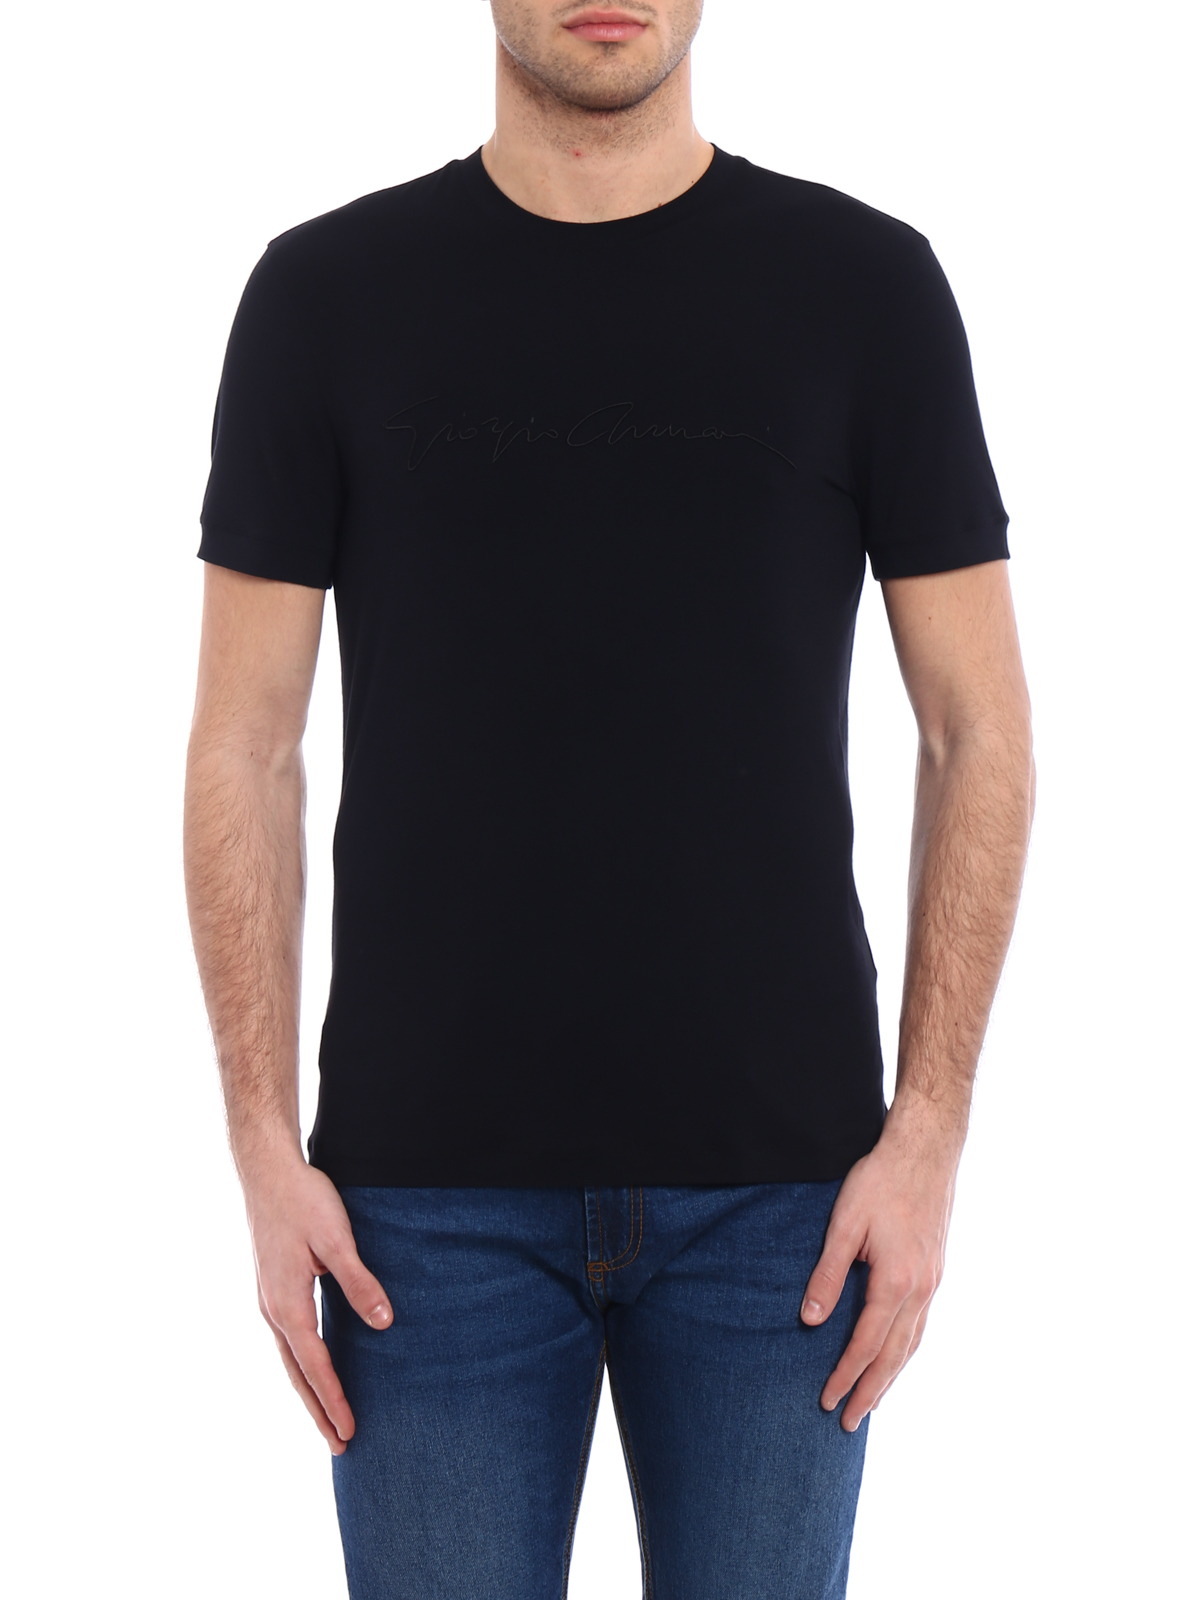 Giorgio Armani Men's Black T-shirts